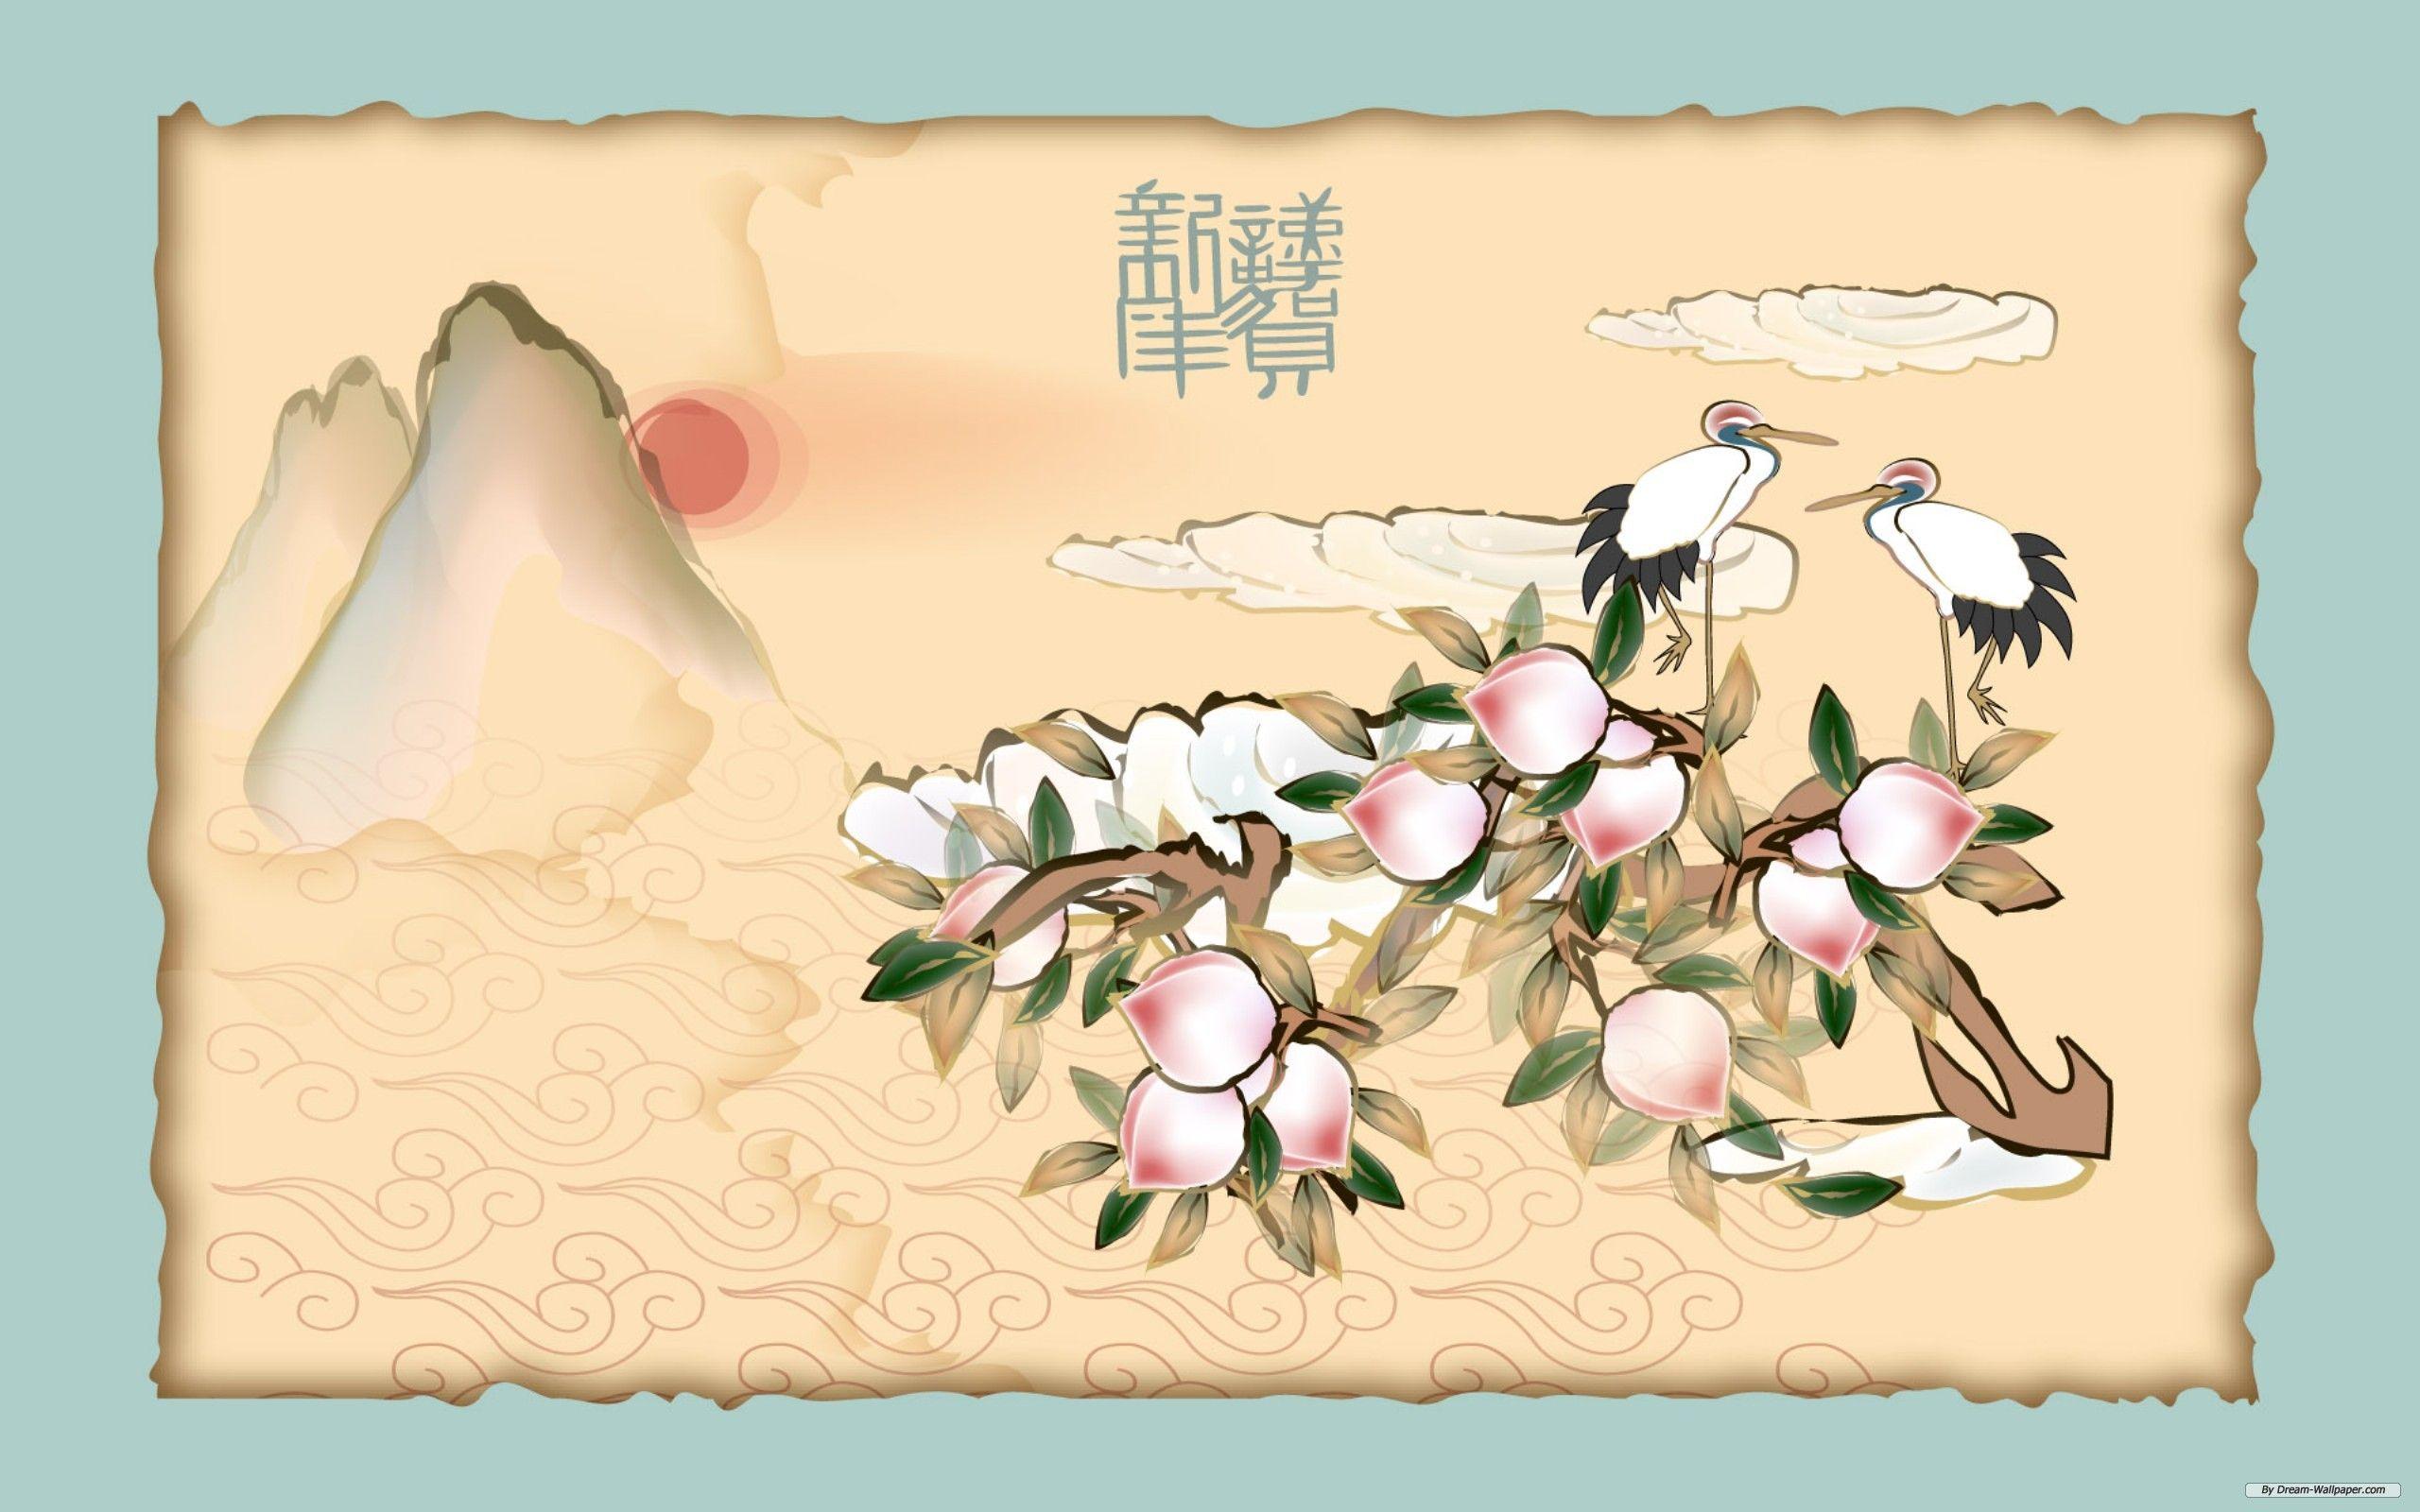 Chinese New Year Wallpaper. Chinese New Year Background